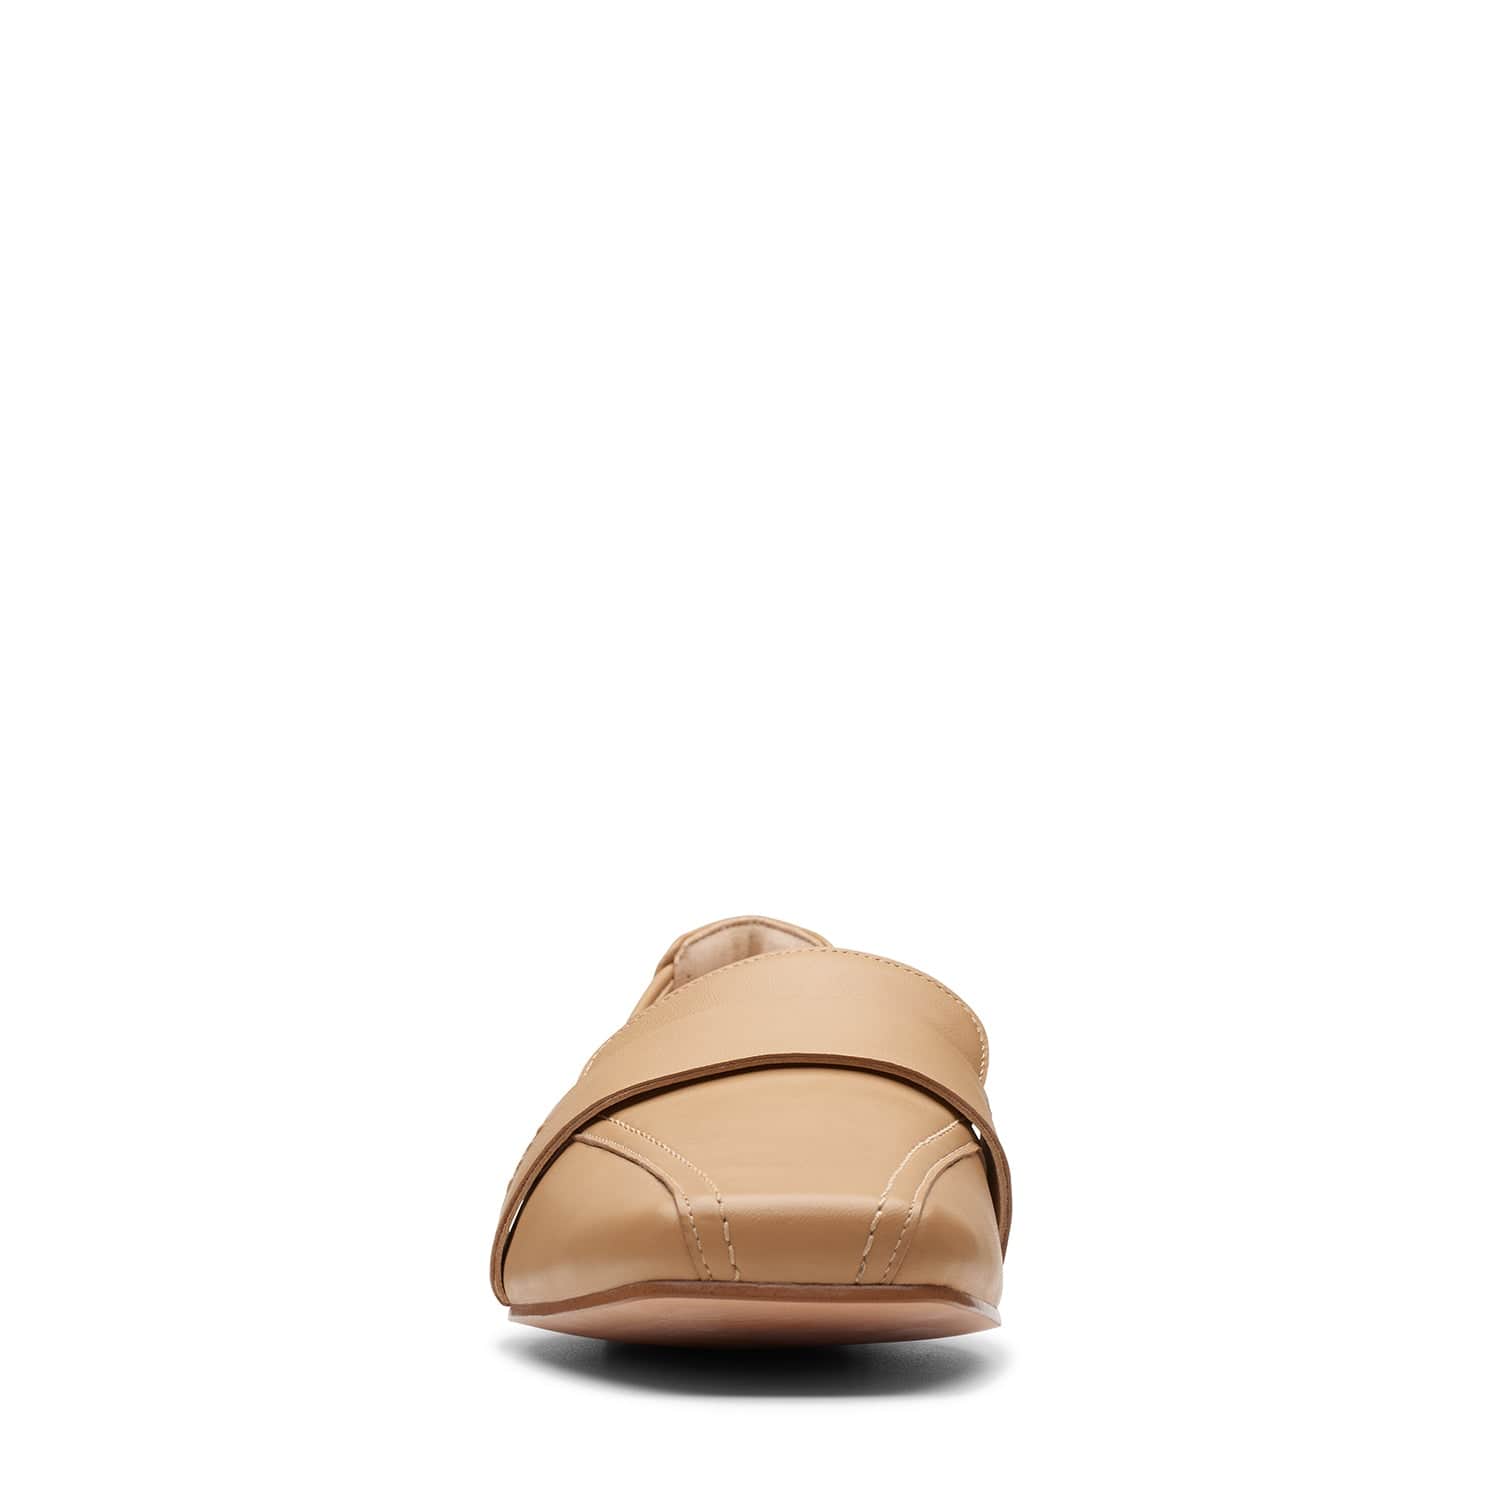 Clarks Seren Flat - Shoes - Camel Leather - 261716134 - D Width (Standard Fit)